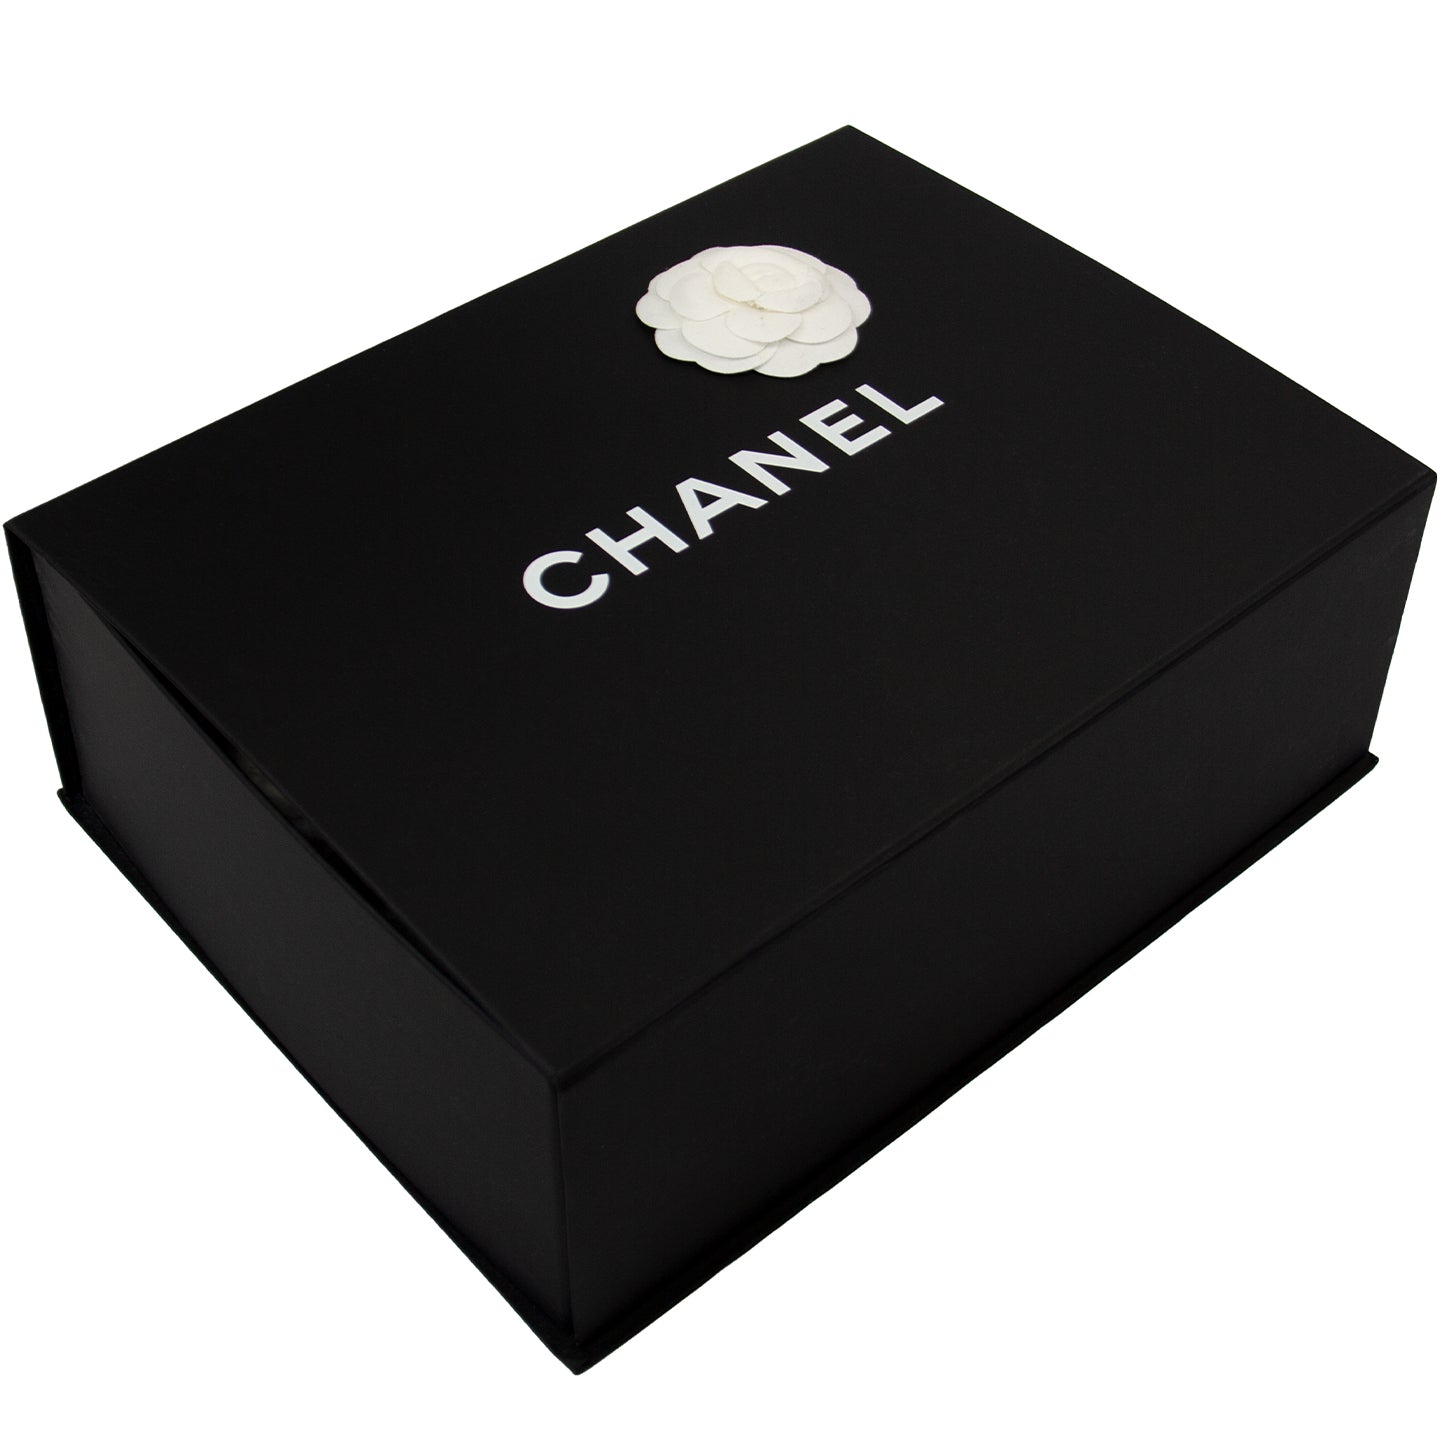 Chanel magnetic nox